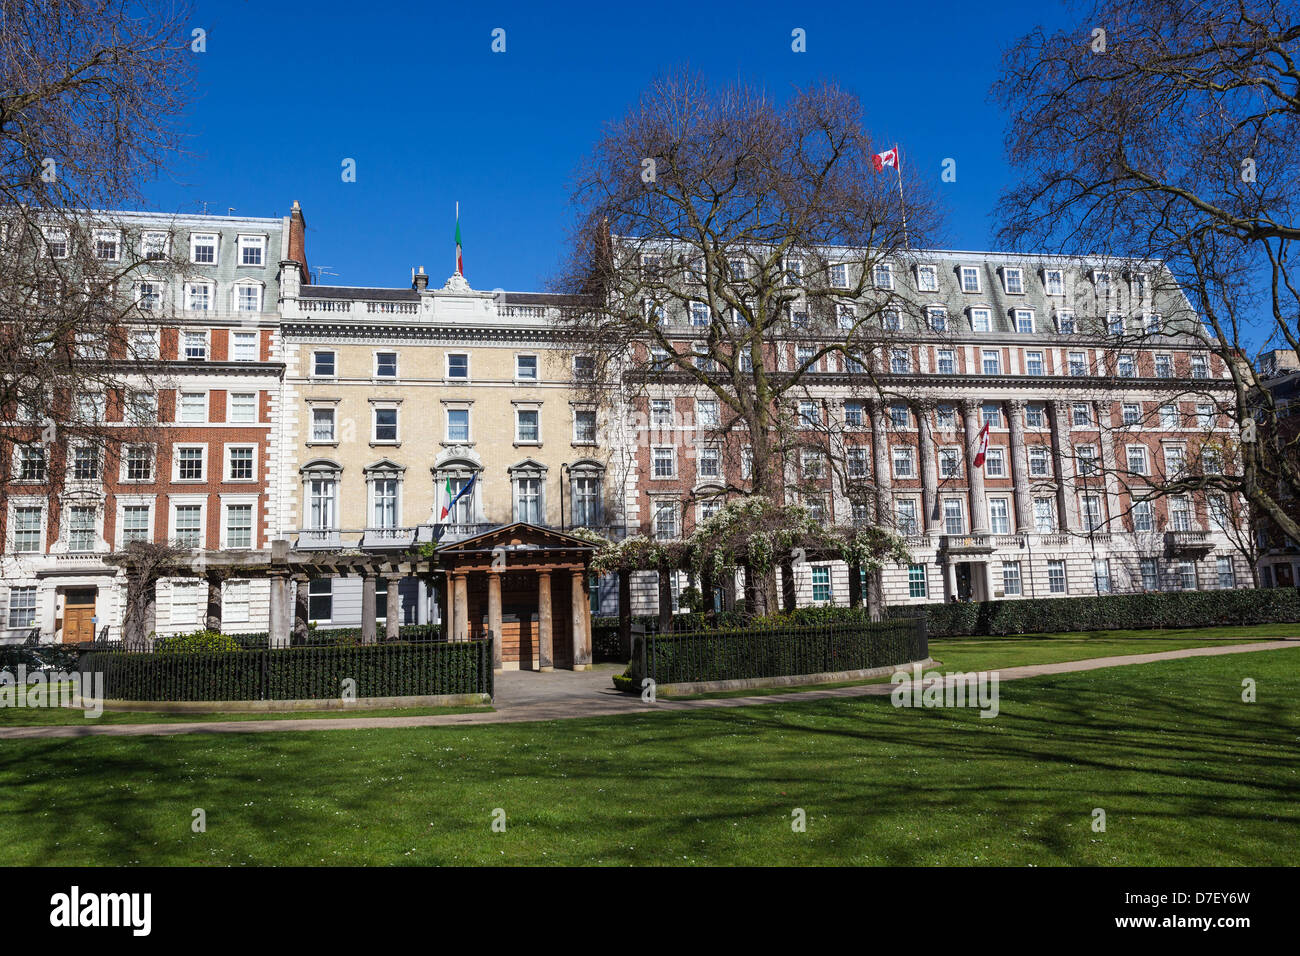 Grosvenor Square Gardens, Mayfair, London, England, UK. Stock Photo